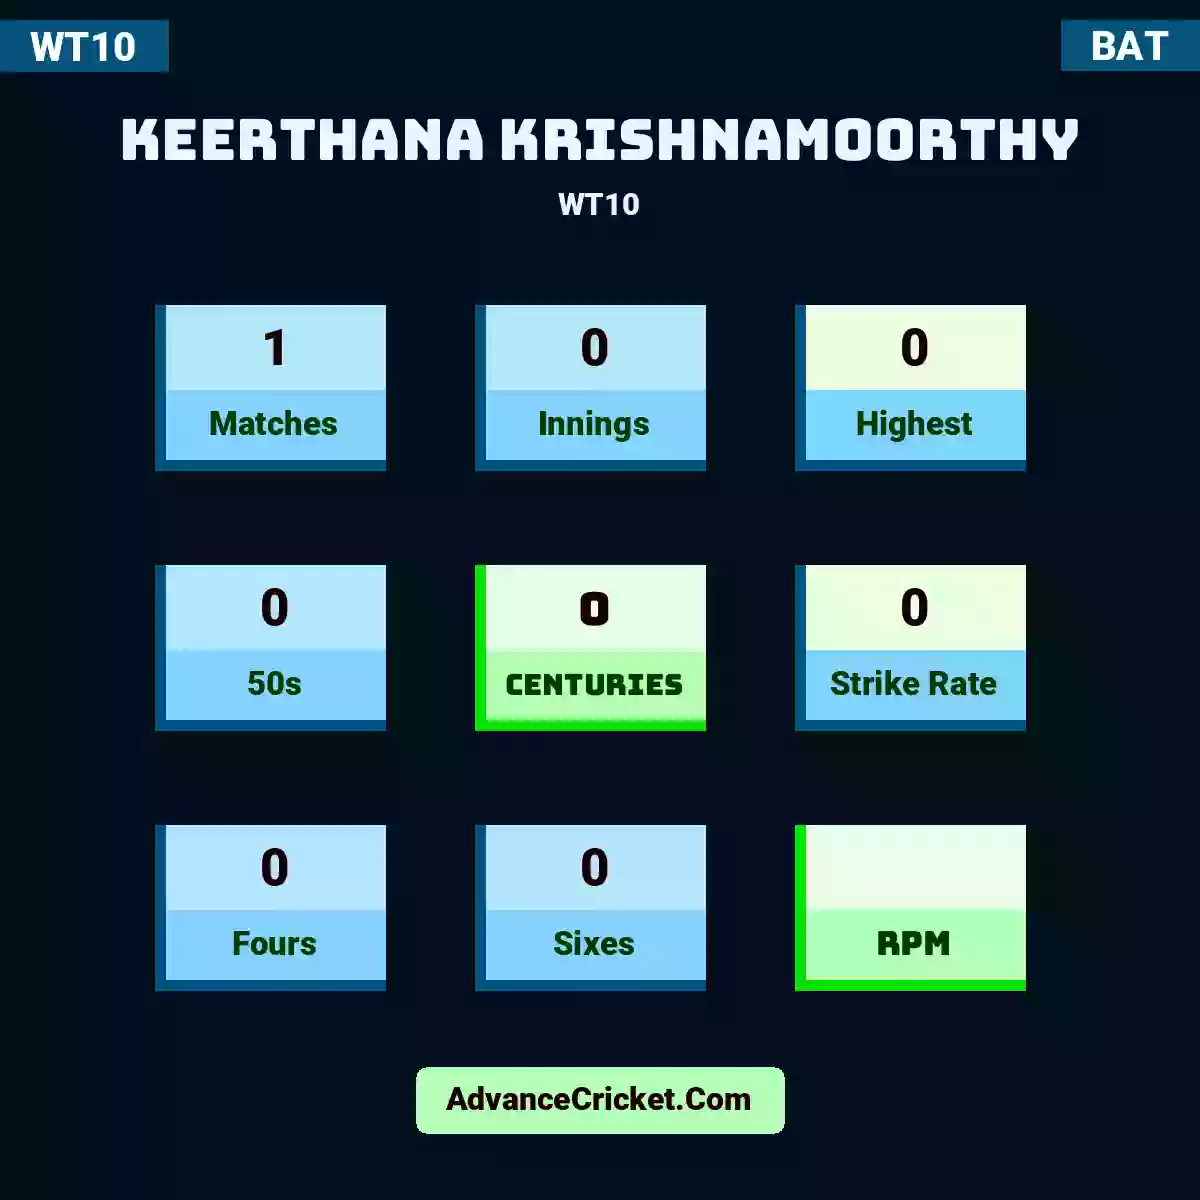 Keerthana Krishnamoorthy WT10 , Keerthana Krishnamoorthy played 1 matches, scored 0 runs as highest, 0 half-centuries, and 0 centuries, with a strike rate of 0. K.Krishnamoorthy hit 0 fours and 0 sixes.